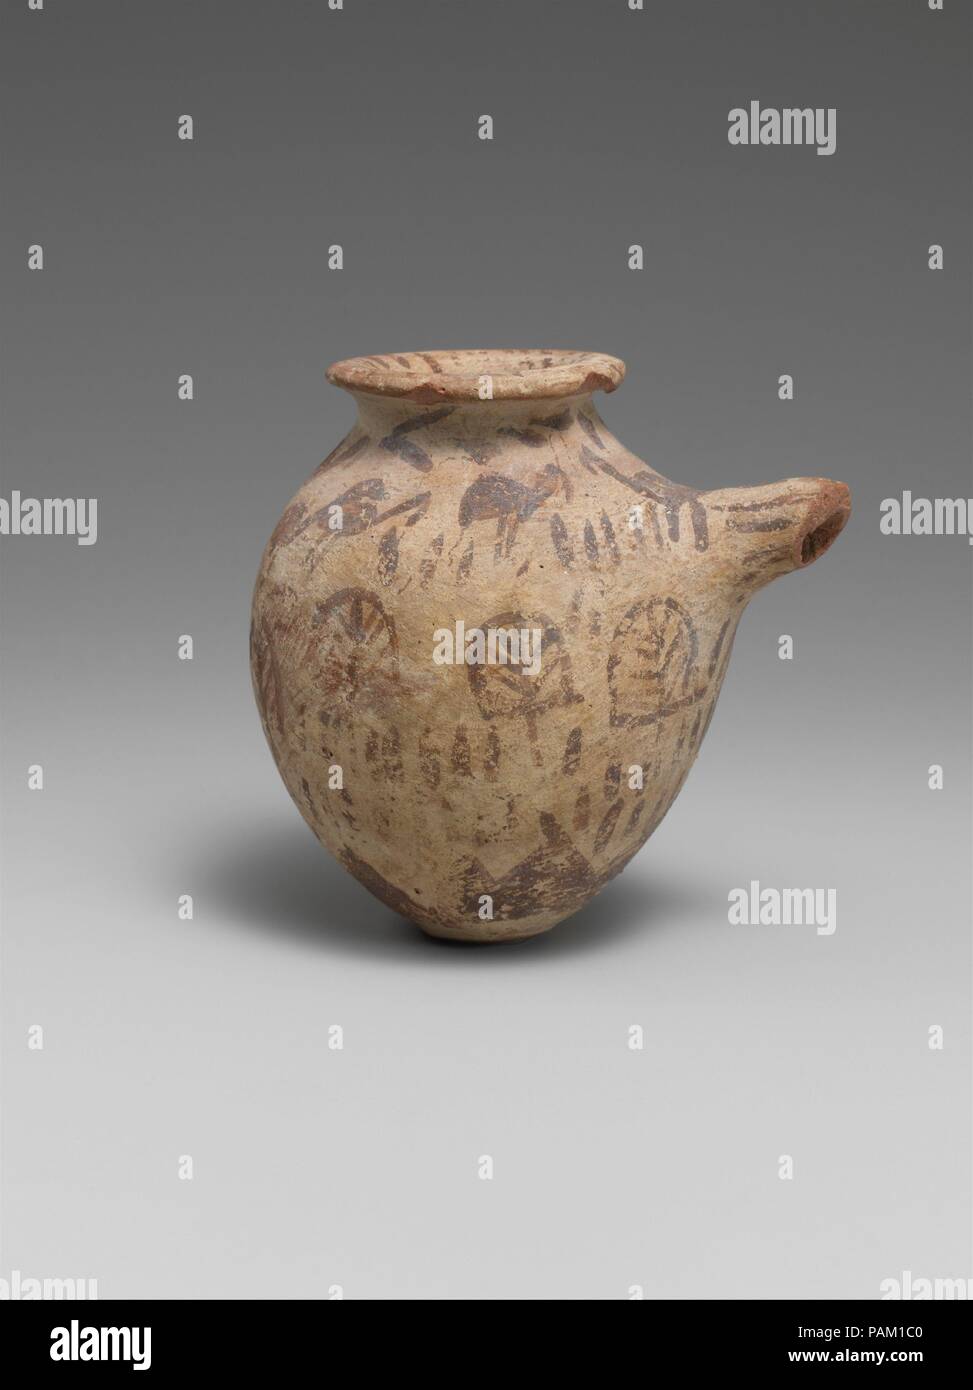 Spouted vessel in decorated ware. Dimensions: H. 8 × Diam. 8.2 cm (3 1/8 × 3 1/4 in.). Date: ca. 3500 B.C.. Museum: Metropolitan Museum of Art, New York, USA. Stock Photo